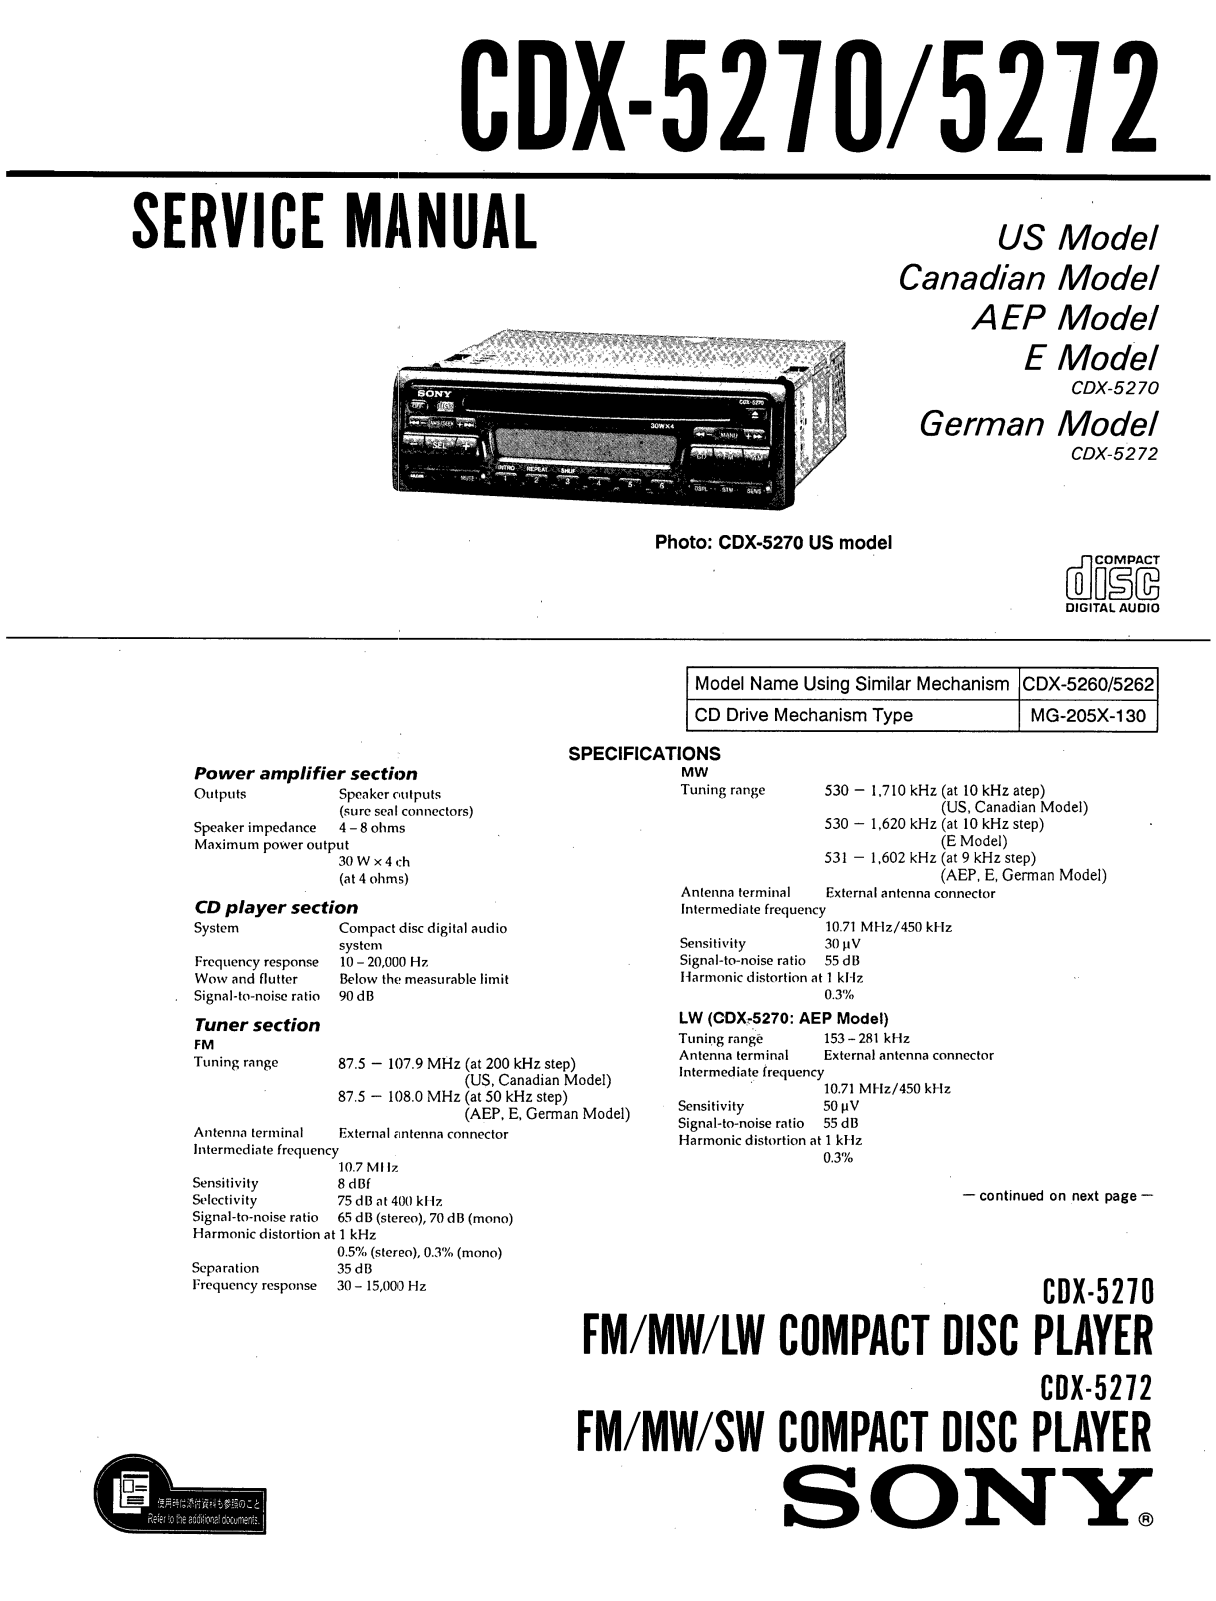 Sony CDX-5272, CDX-5270 Service manual